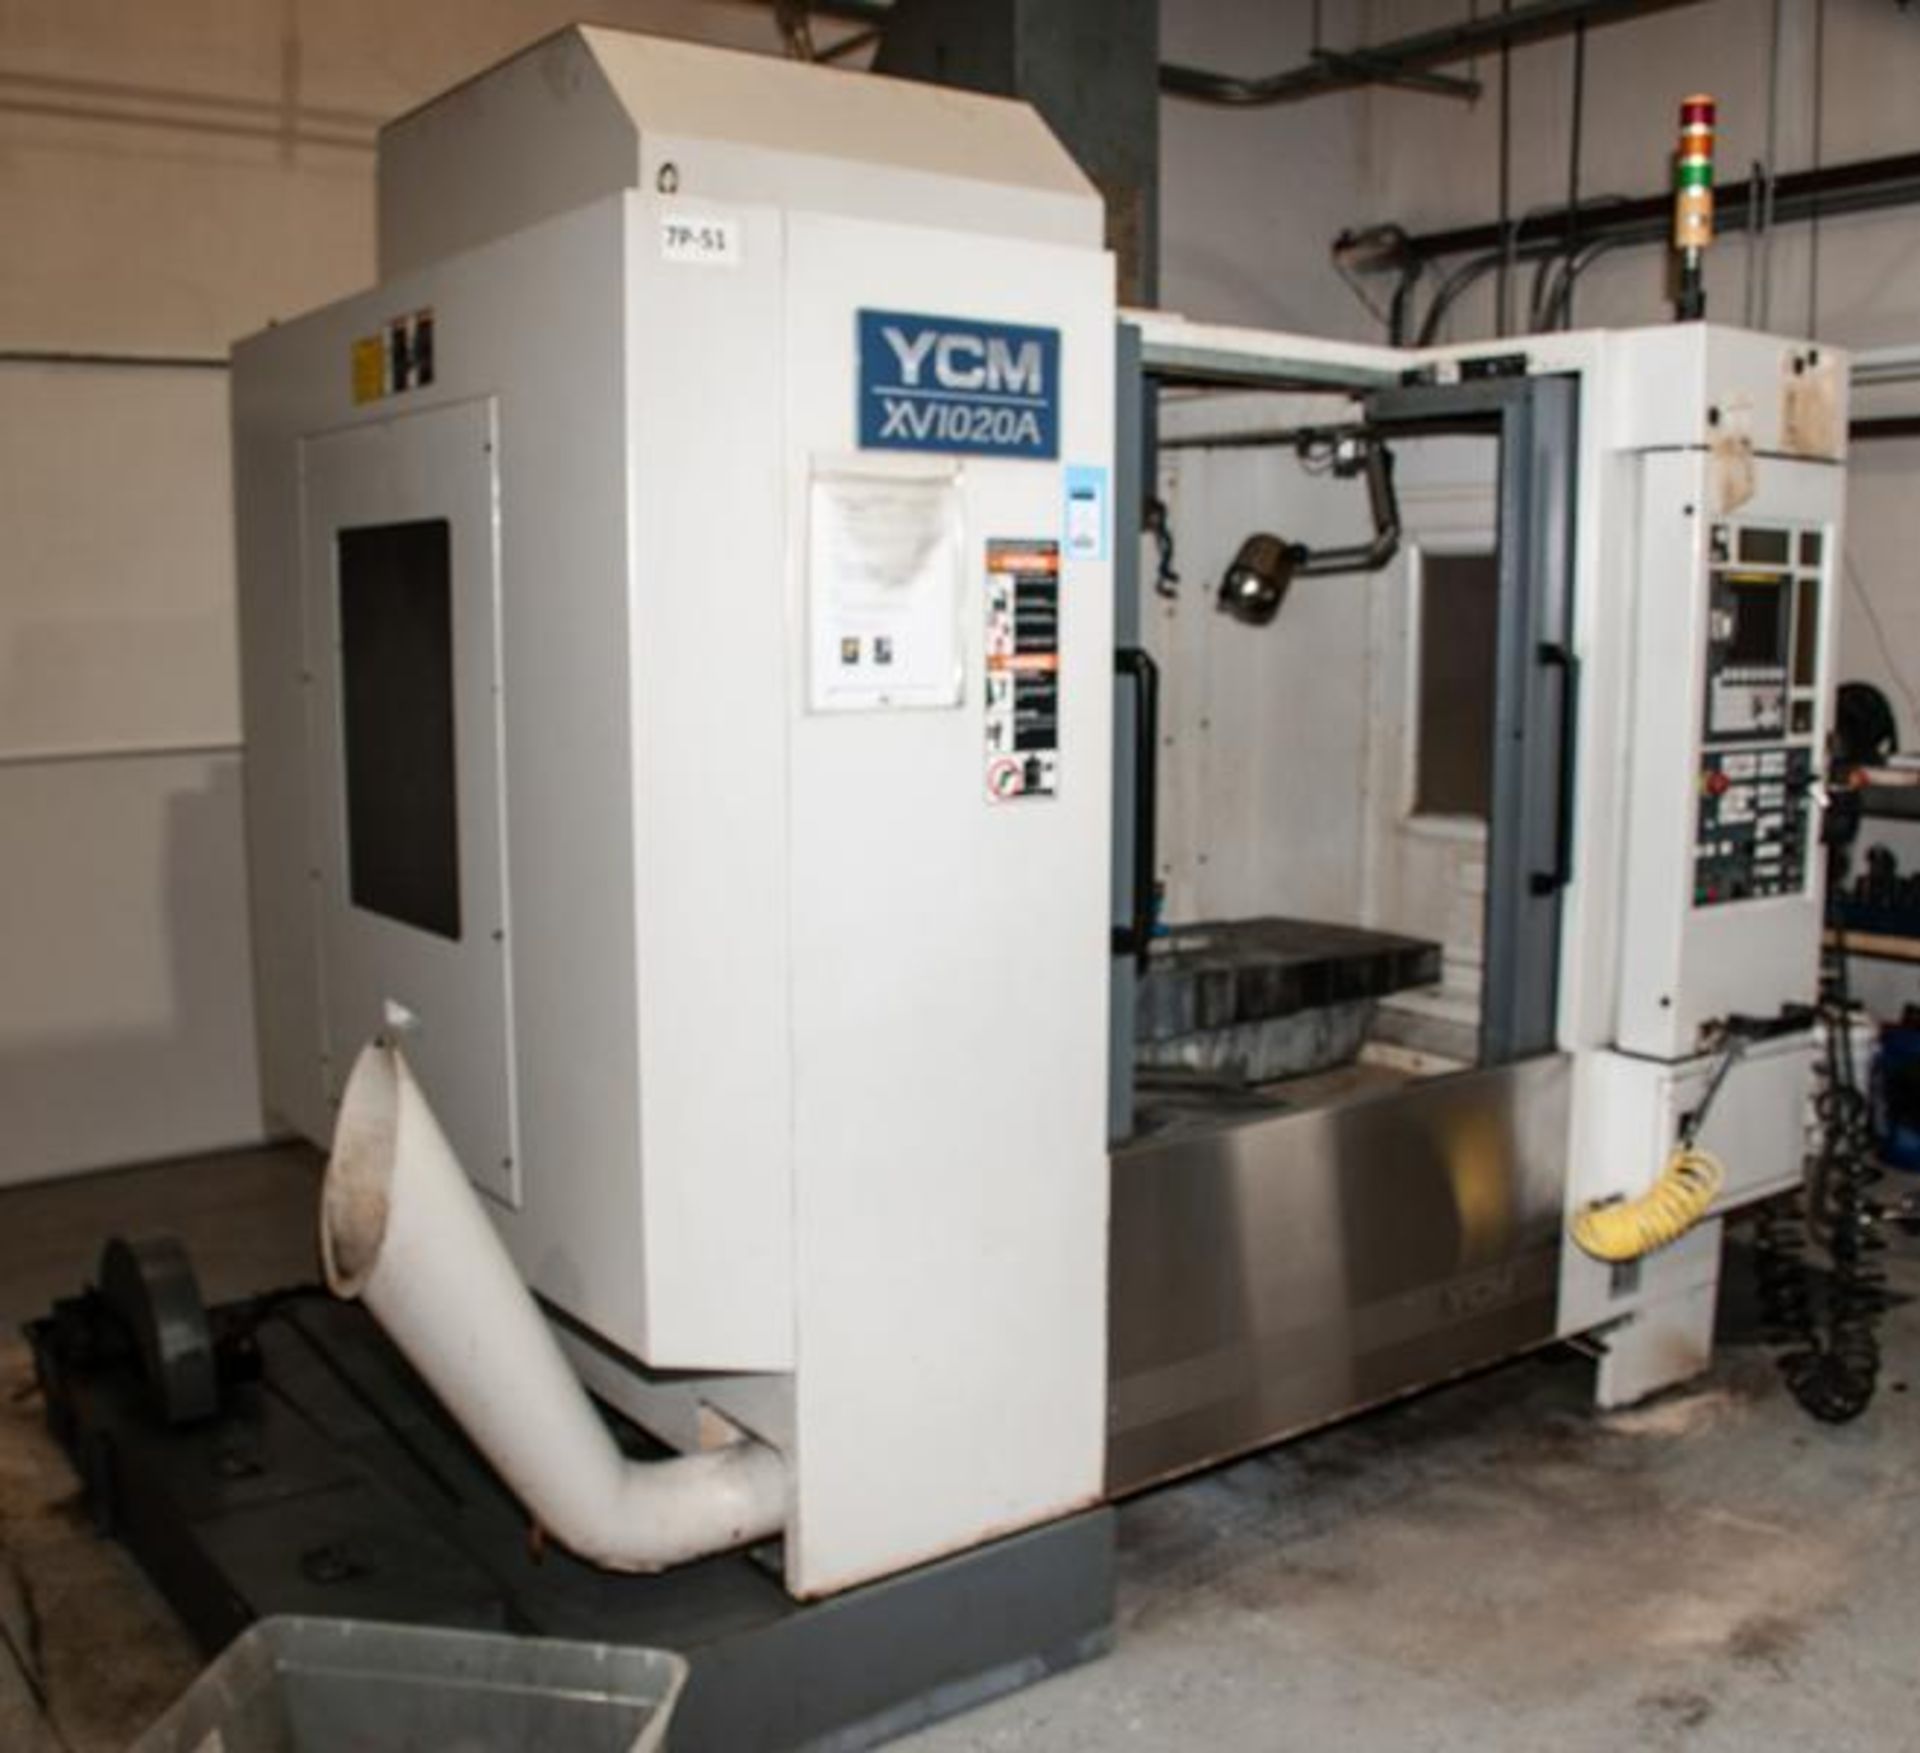 2011 YCM XV1020A, Mfg # 0678 CNC Vert machining center. w/ tool changer, 24 position tool carousel